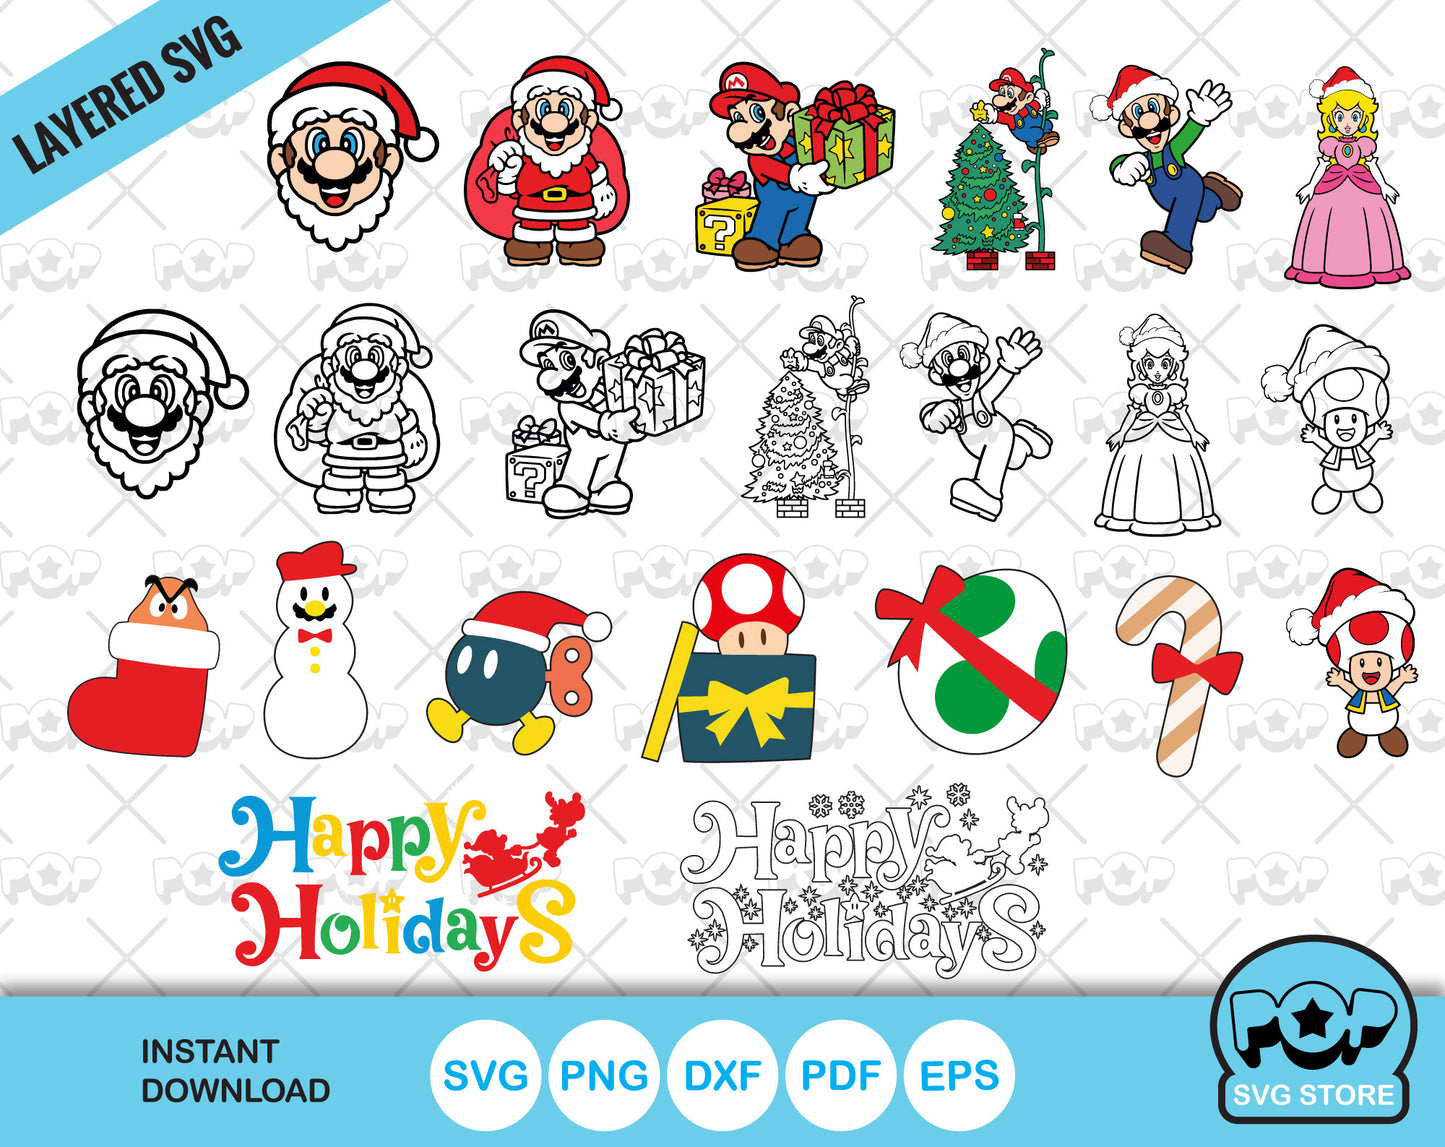 Super Mario Christmas clipart bundle, Mario Christmas SVG cut files for Cricut / Silhouette, PNG, DXF, instant download